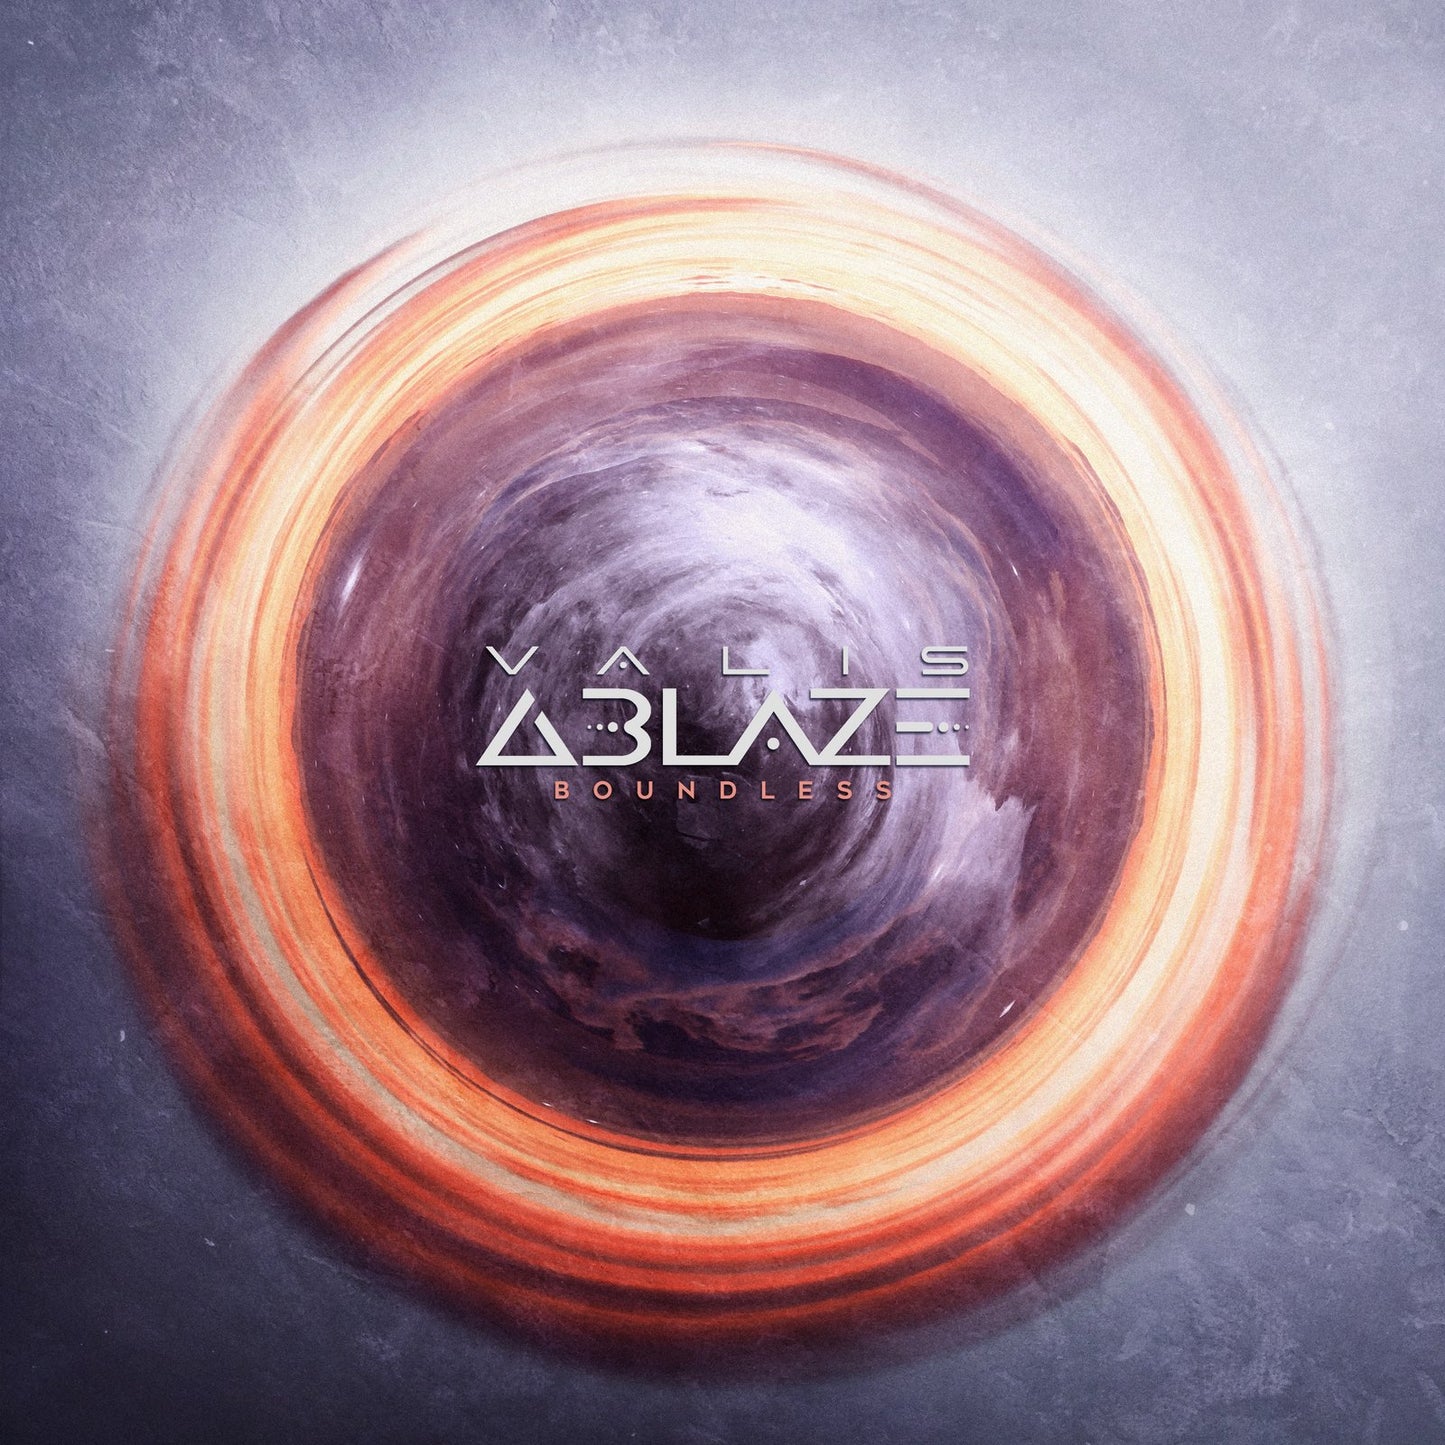 Valis Ablaze "Boundless" CD